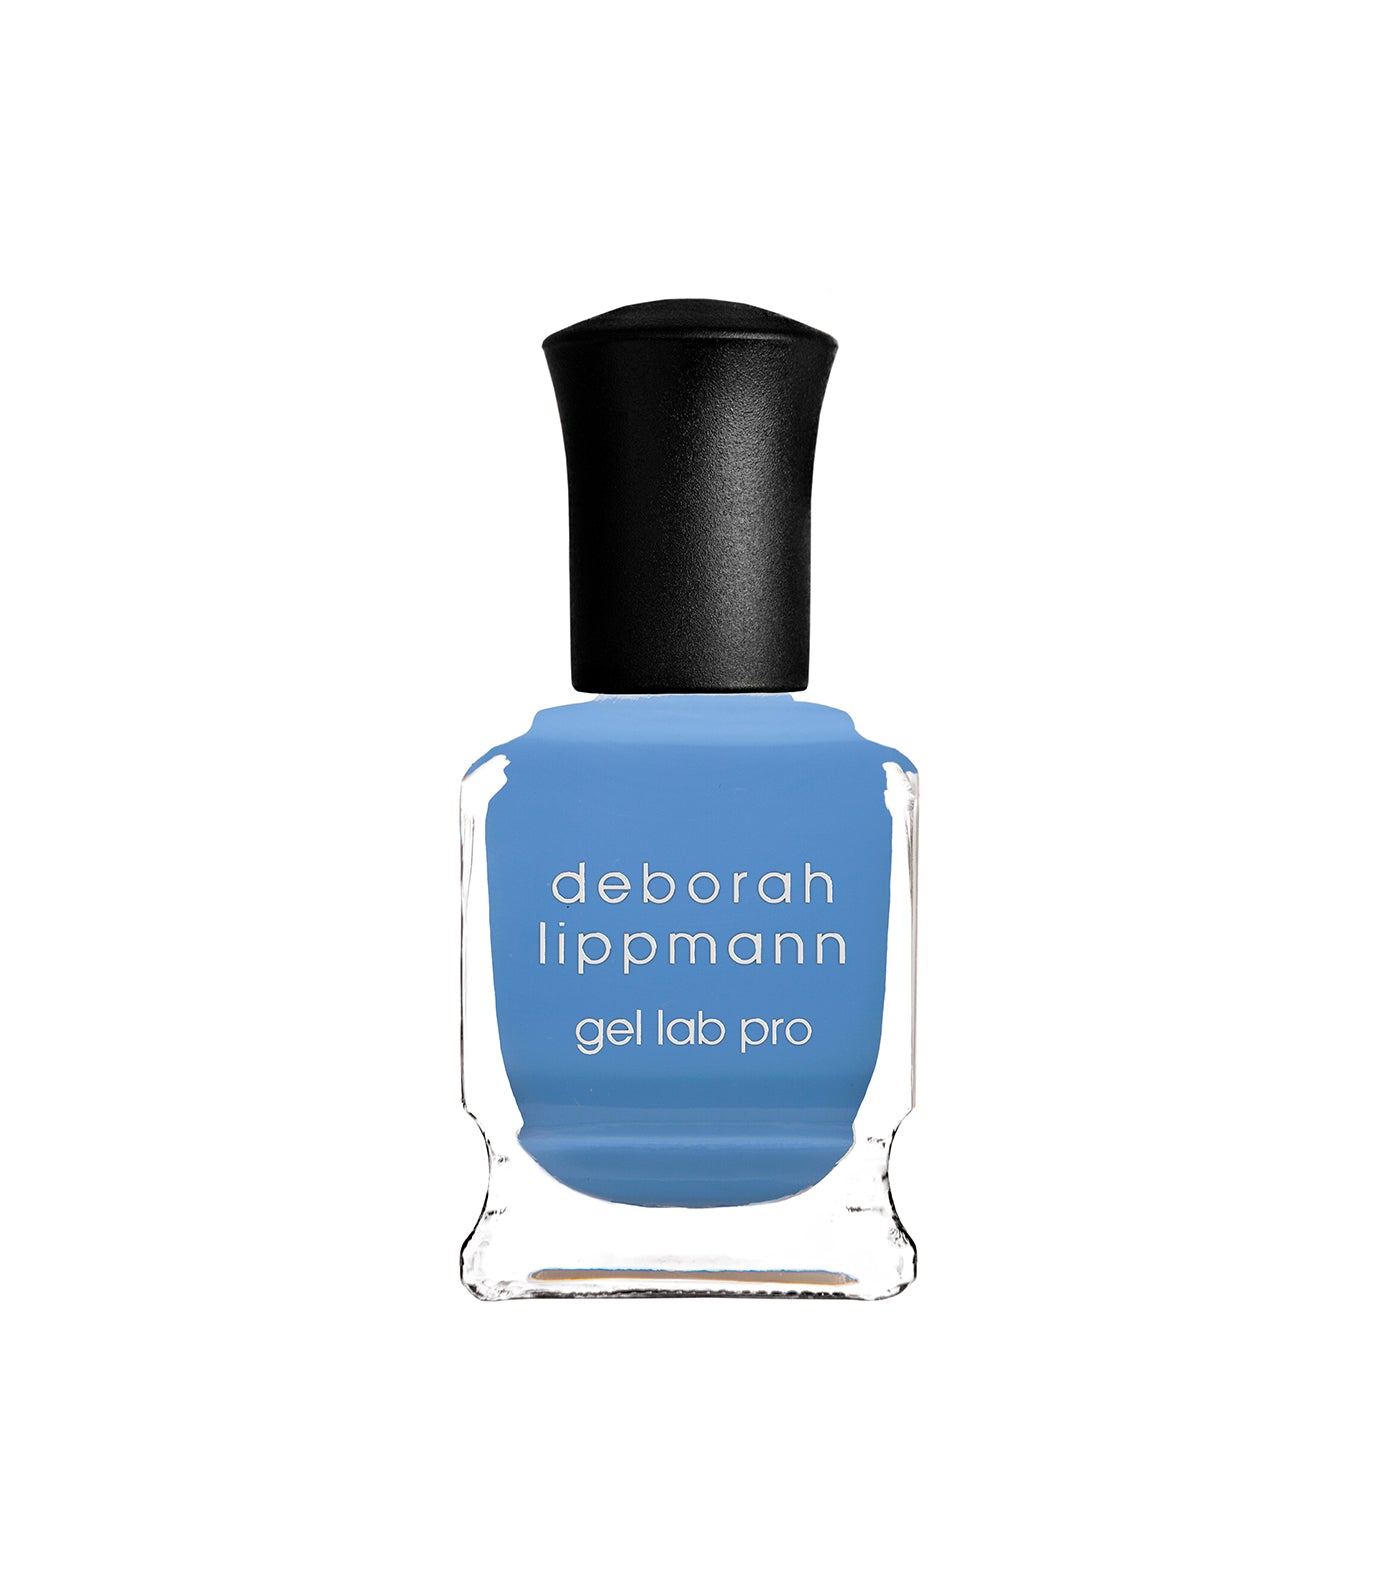 deborah lippmann gel lab pro nail polish - summer collection what's good